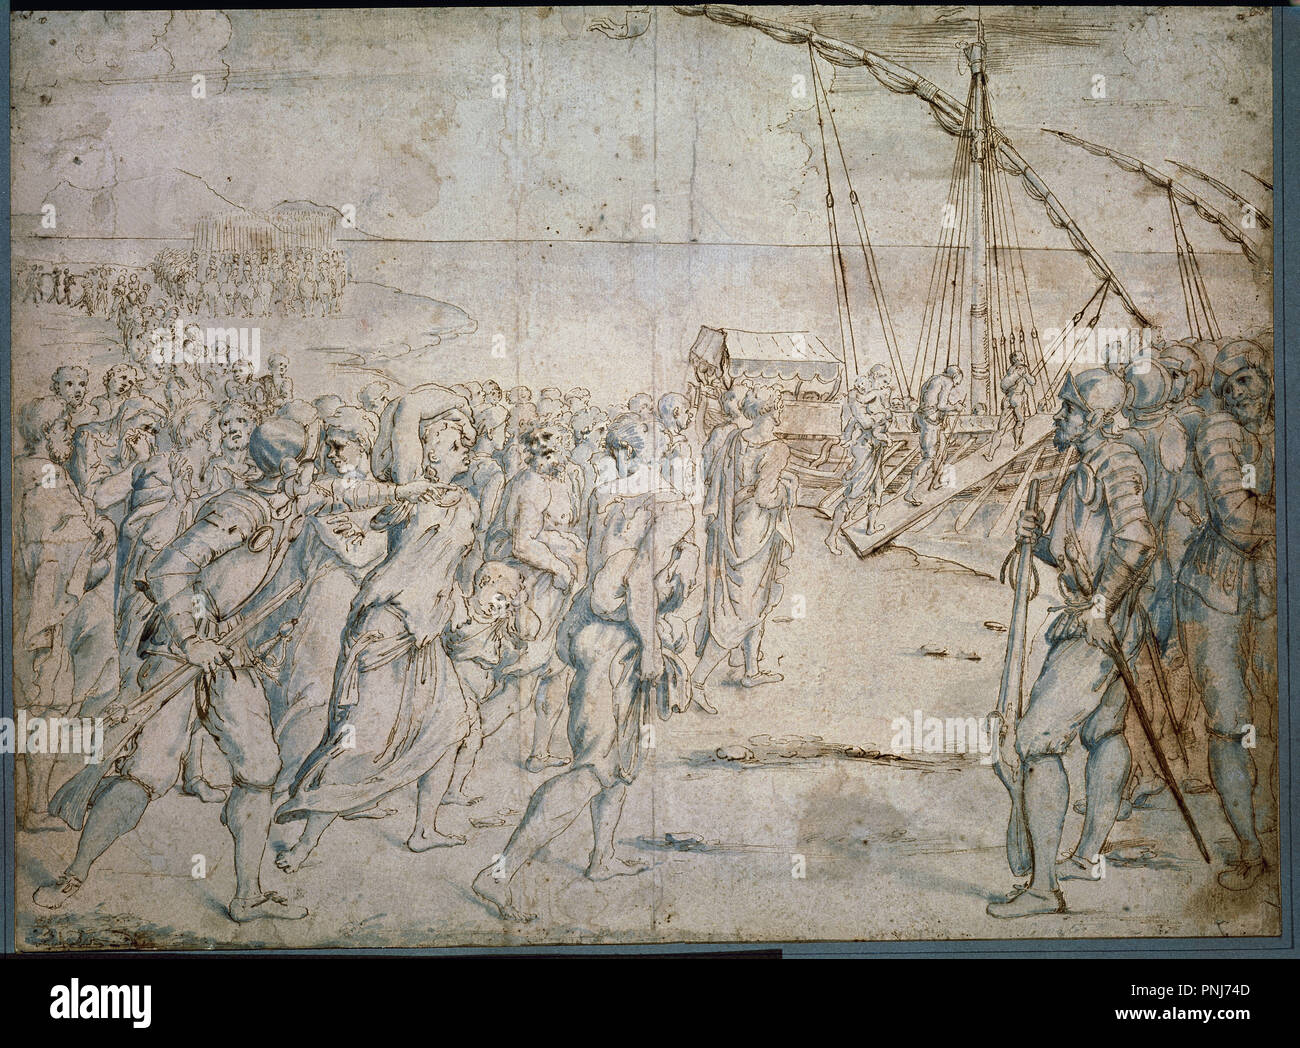 Drawing. Moorish people expelled from Spain. Ca. 1627. Valencia harbour. Madrid, Prado musem. Author: CARDUCCI, VINCENZO. Location: MUSEO DEL PRADO-DIBUJOS. MADRID. SPAIN. Stock Photo